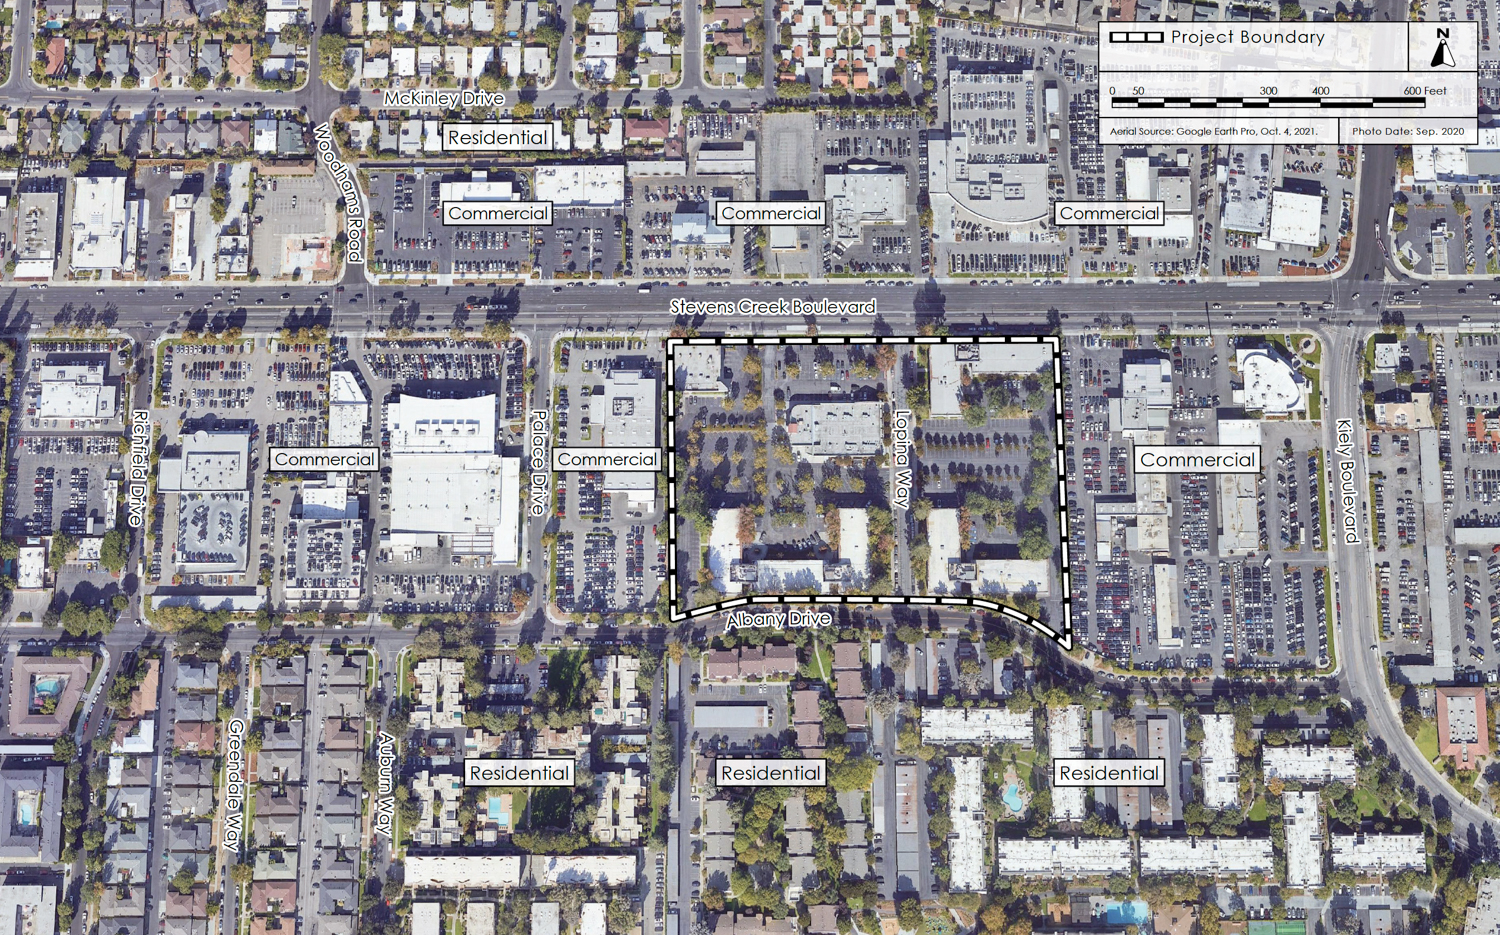 4300 Stevens Creek Boulevard site map, illustration by HMH California